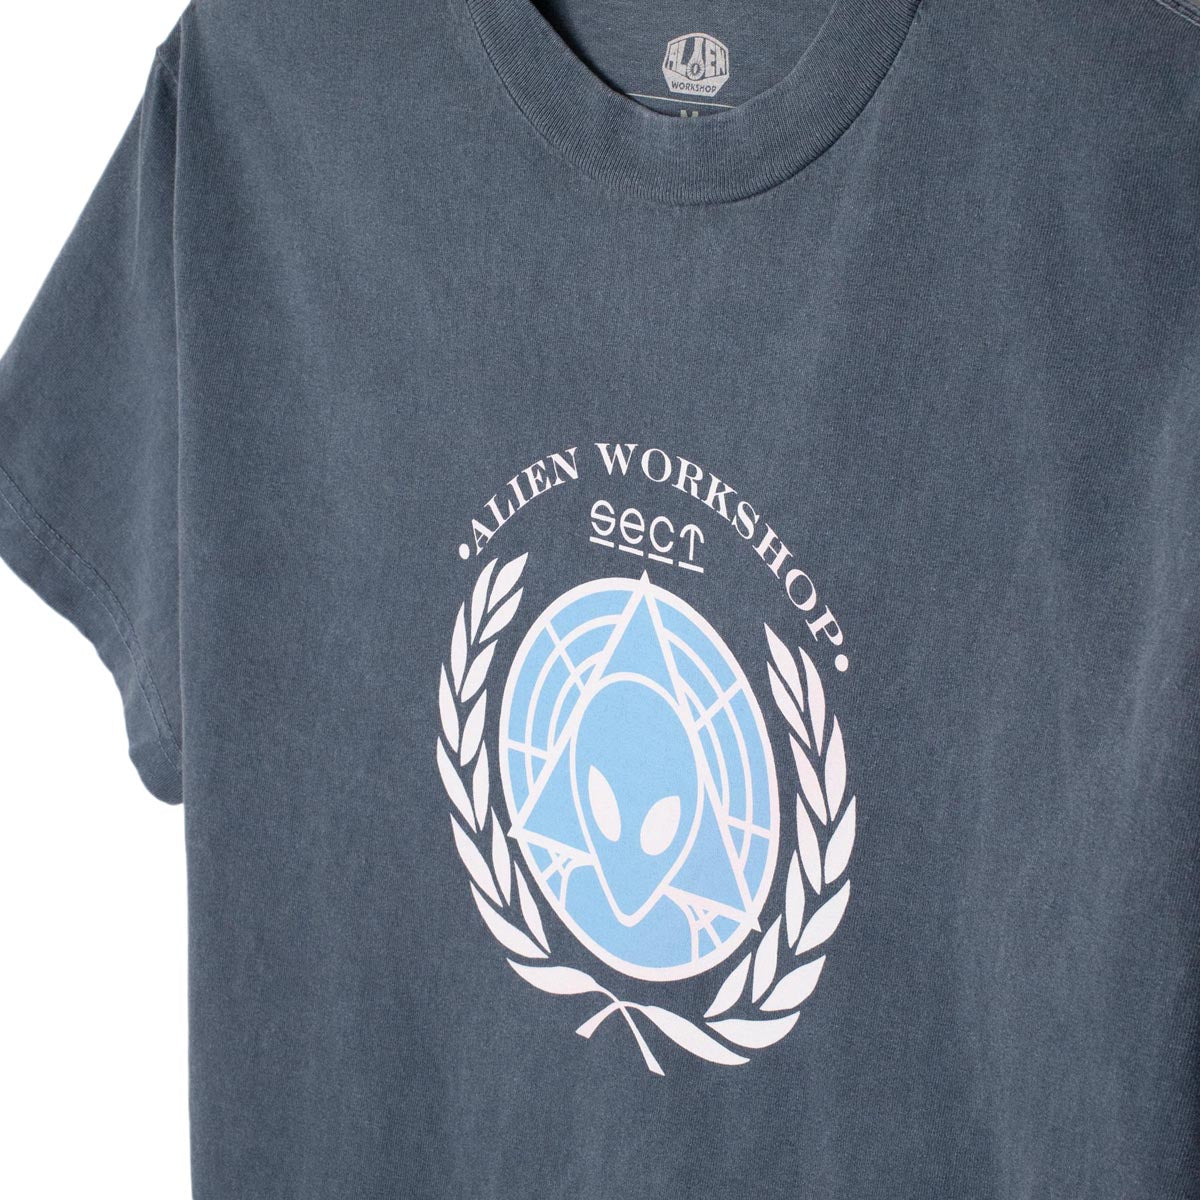 Alien Workshop AWOL T-Shirt - Faded Navy image 2